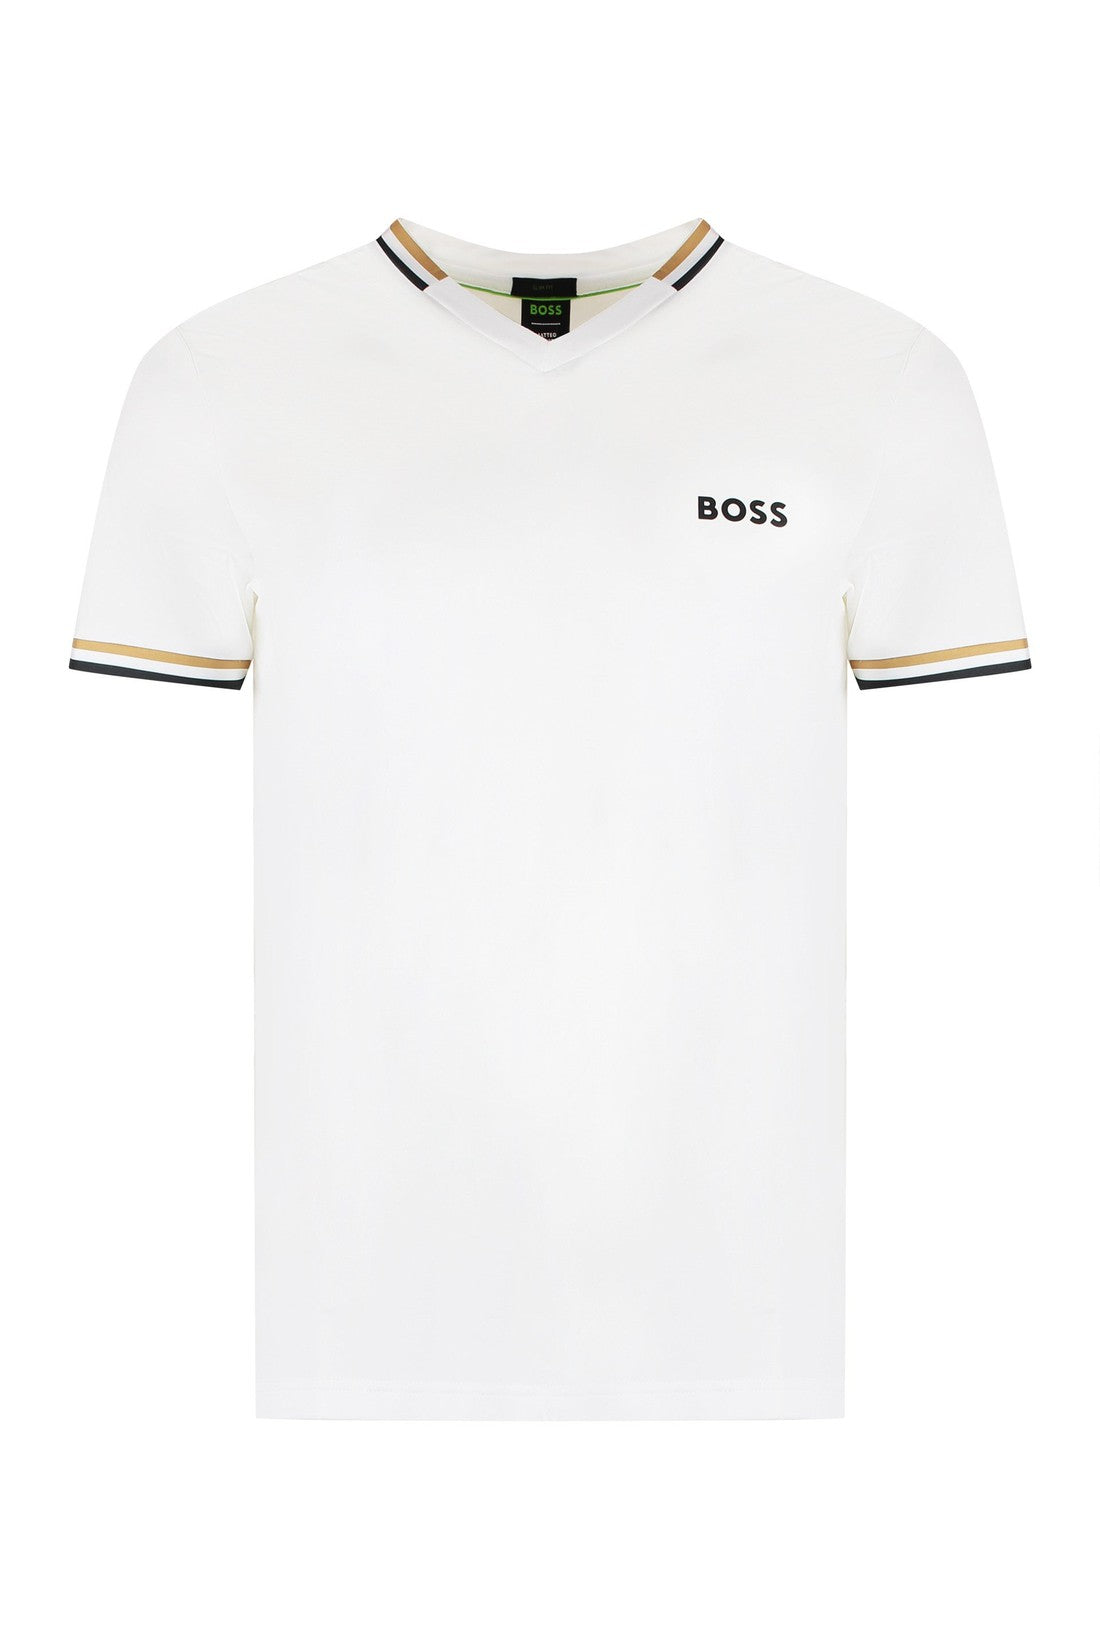 BOSS-OUTLET-SALE-BOSS x Matteo Berrettini - Techno fabric t-shirt-ARCHIVIST